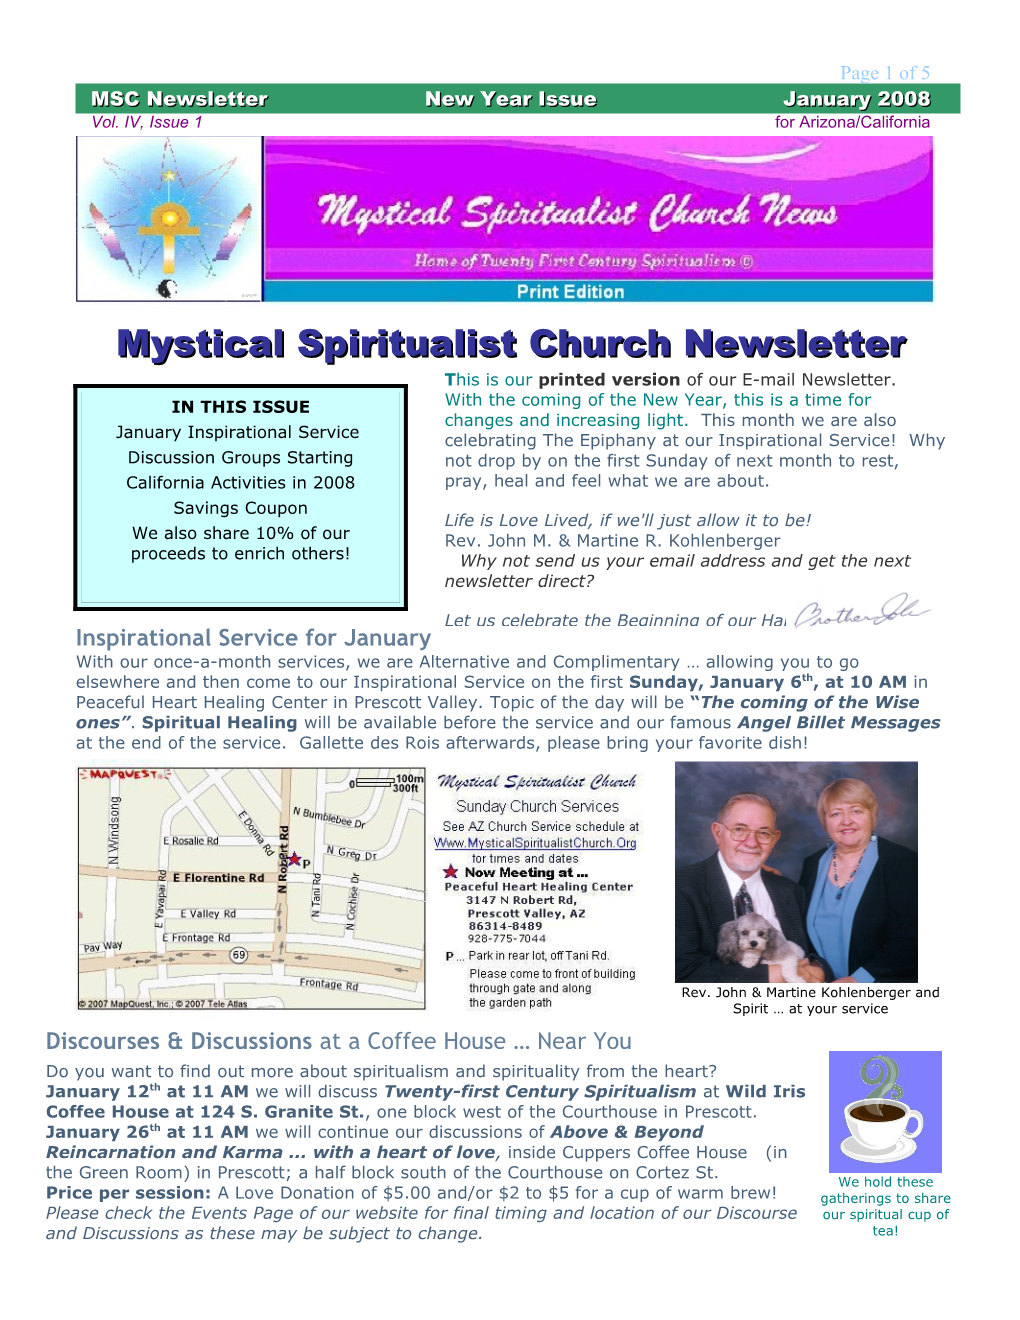 Mystical Spiritualist Church Newsletter